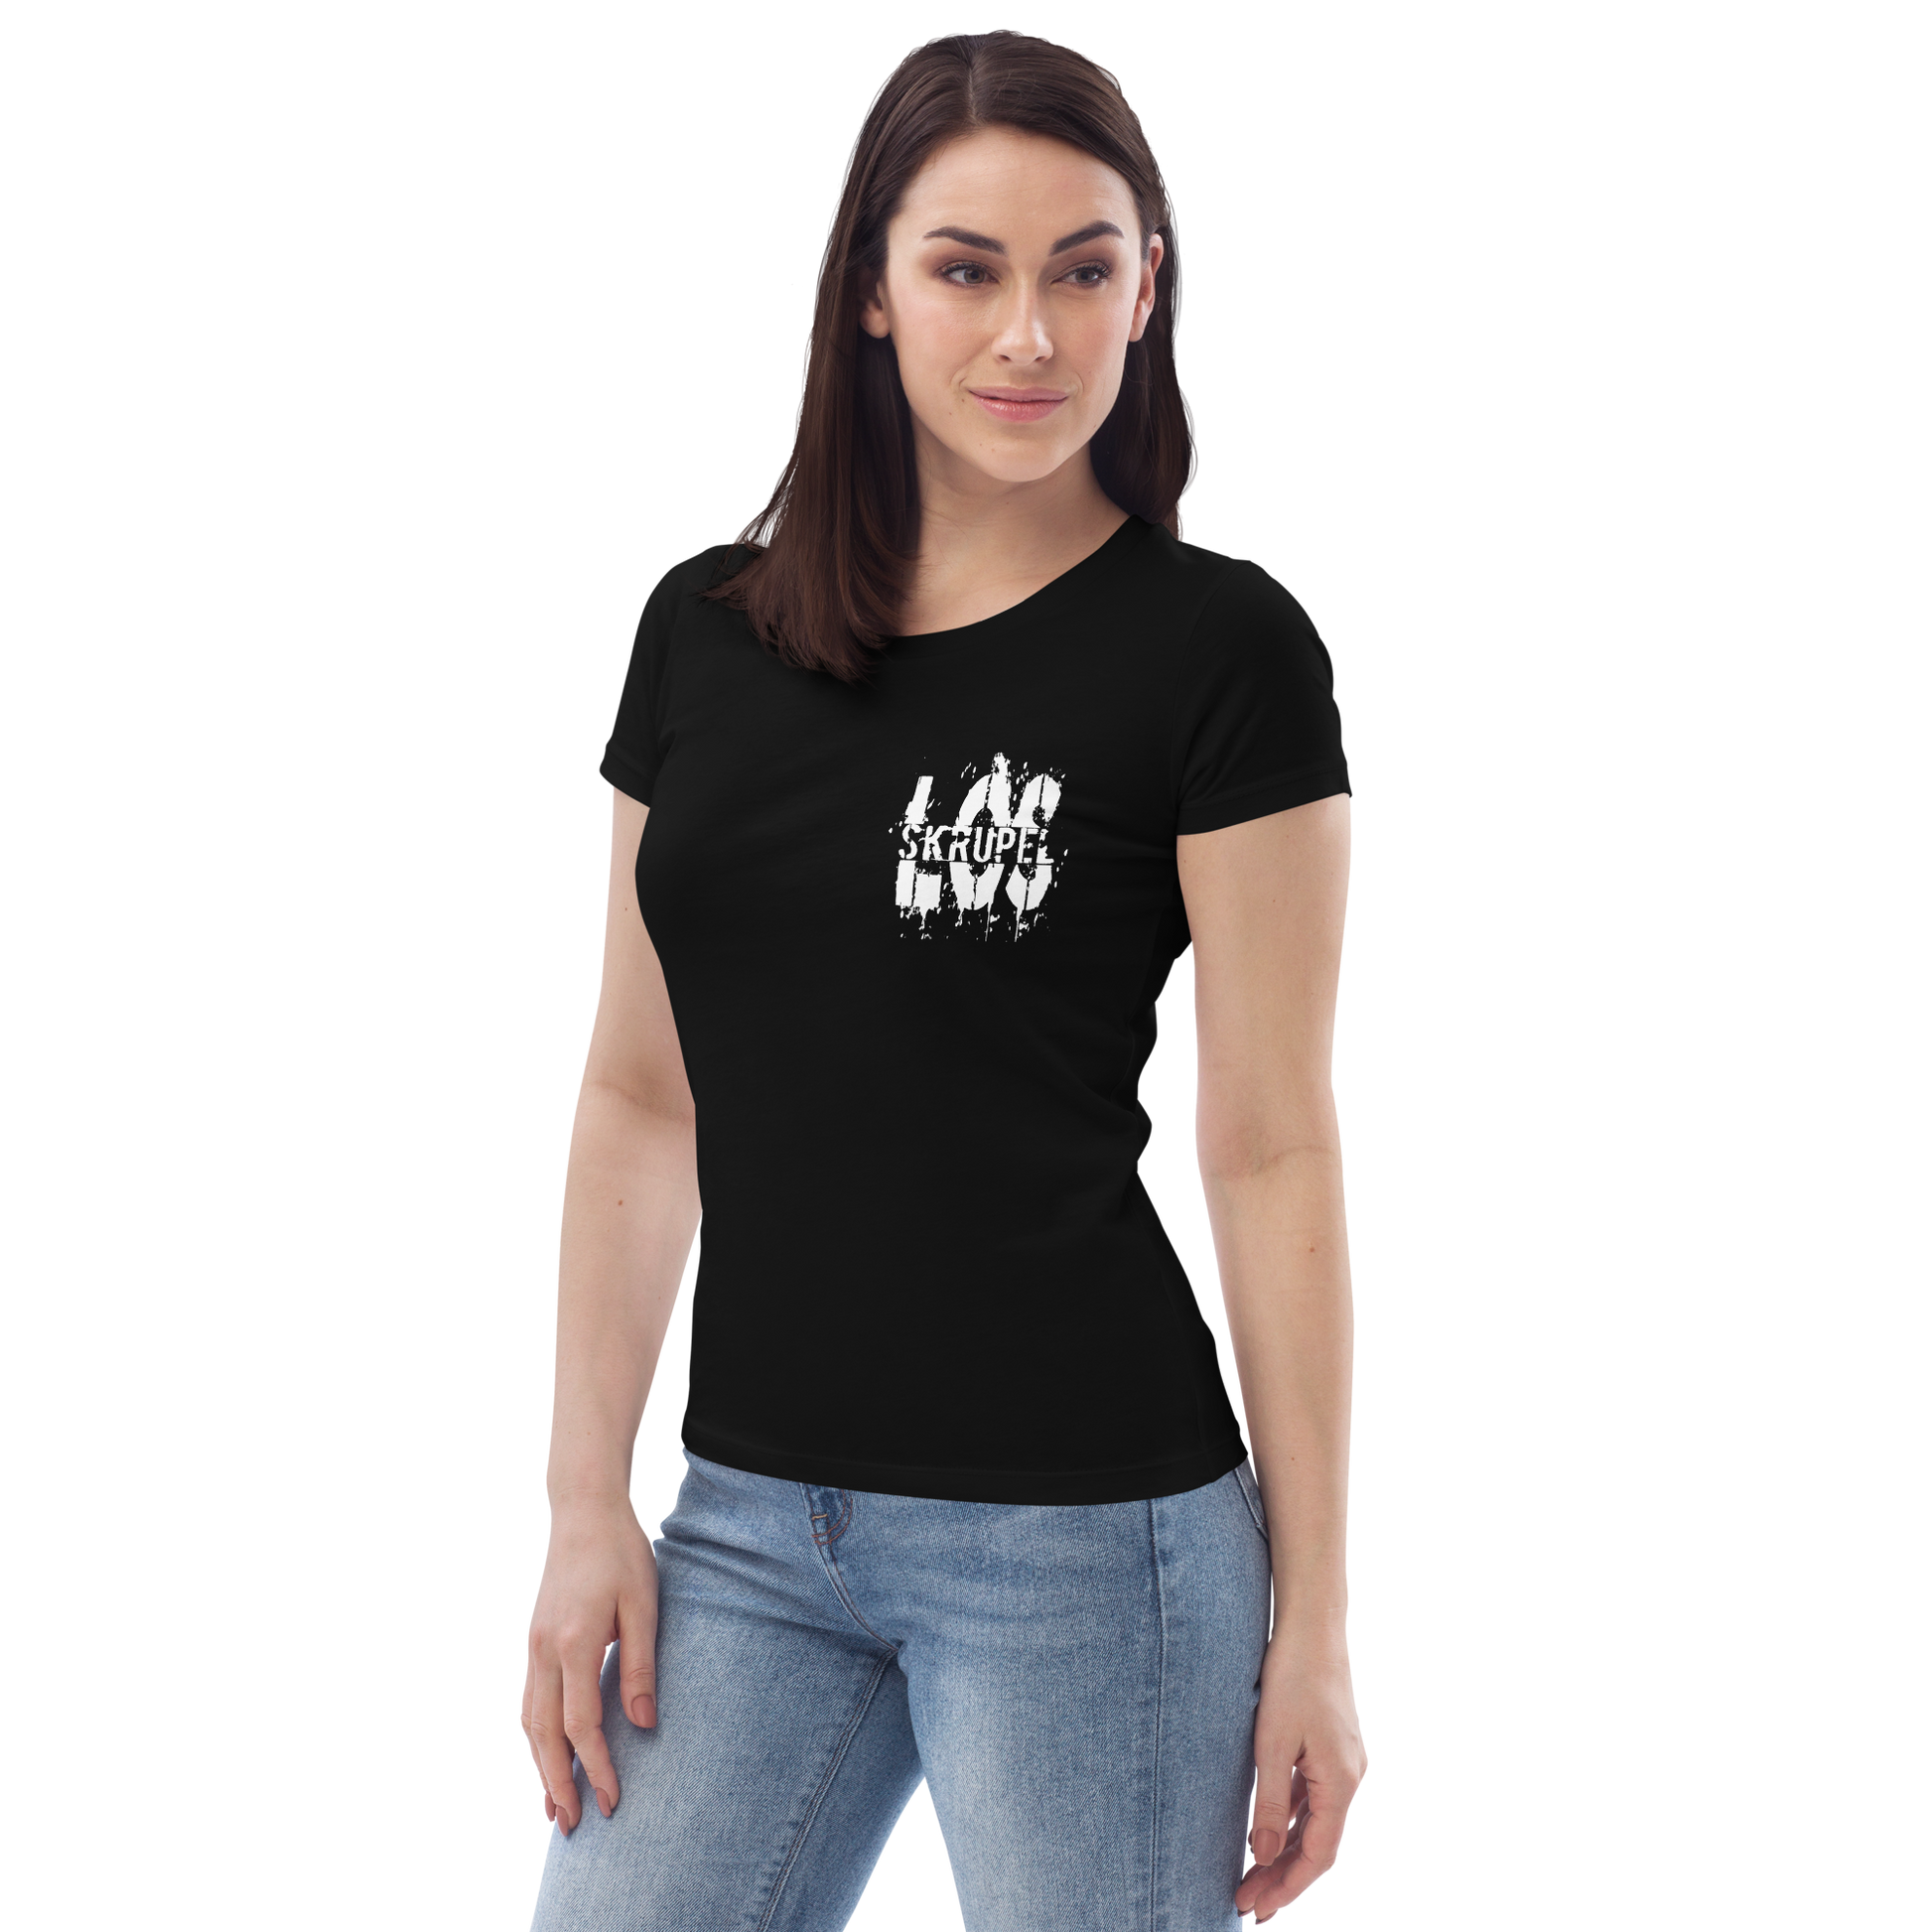 Skrupellos Enganliegendes Öko-T-Shirt für Damen – Shirt for All